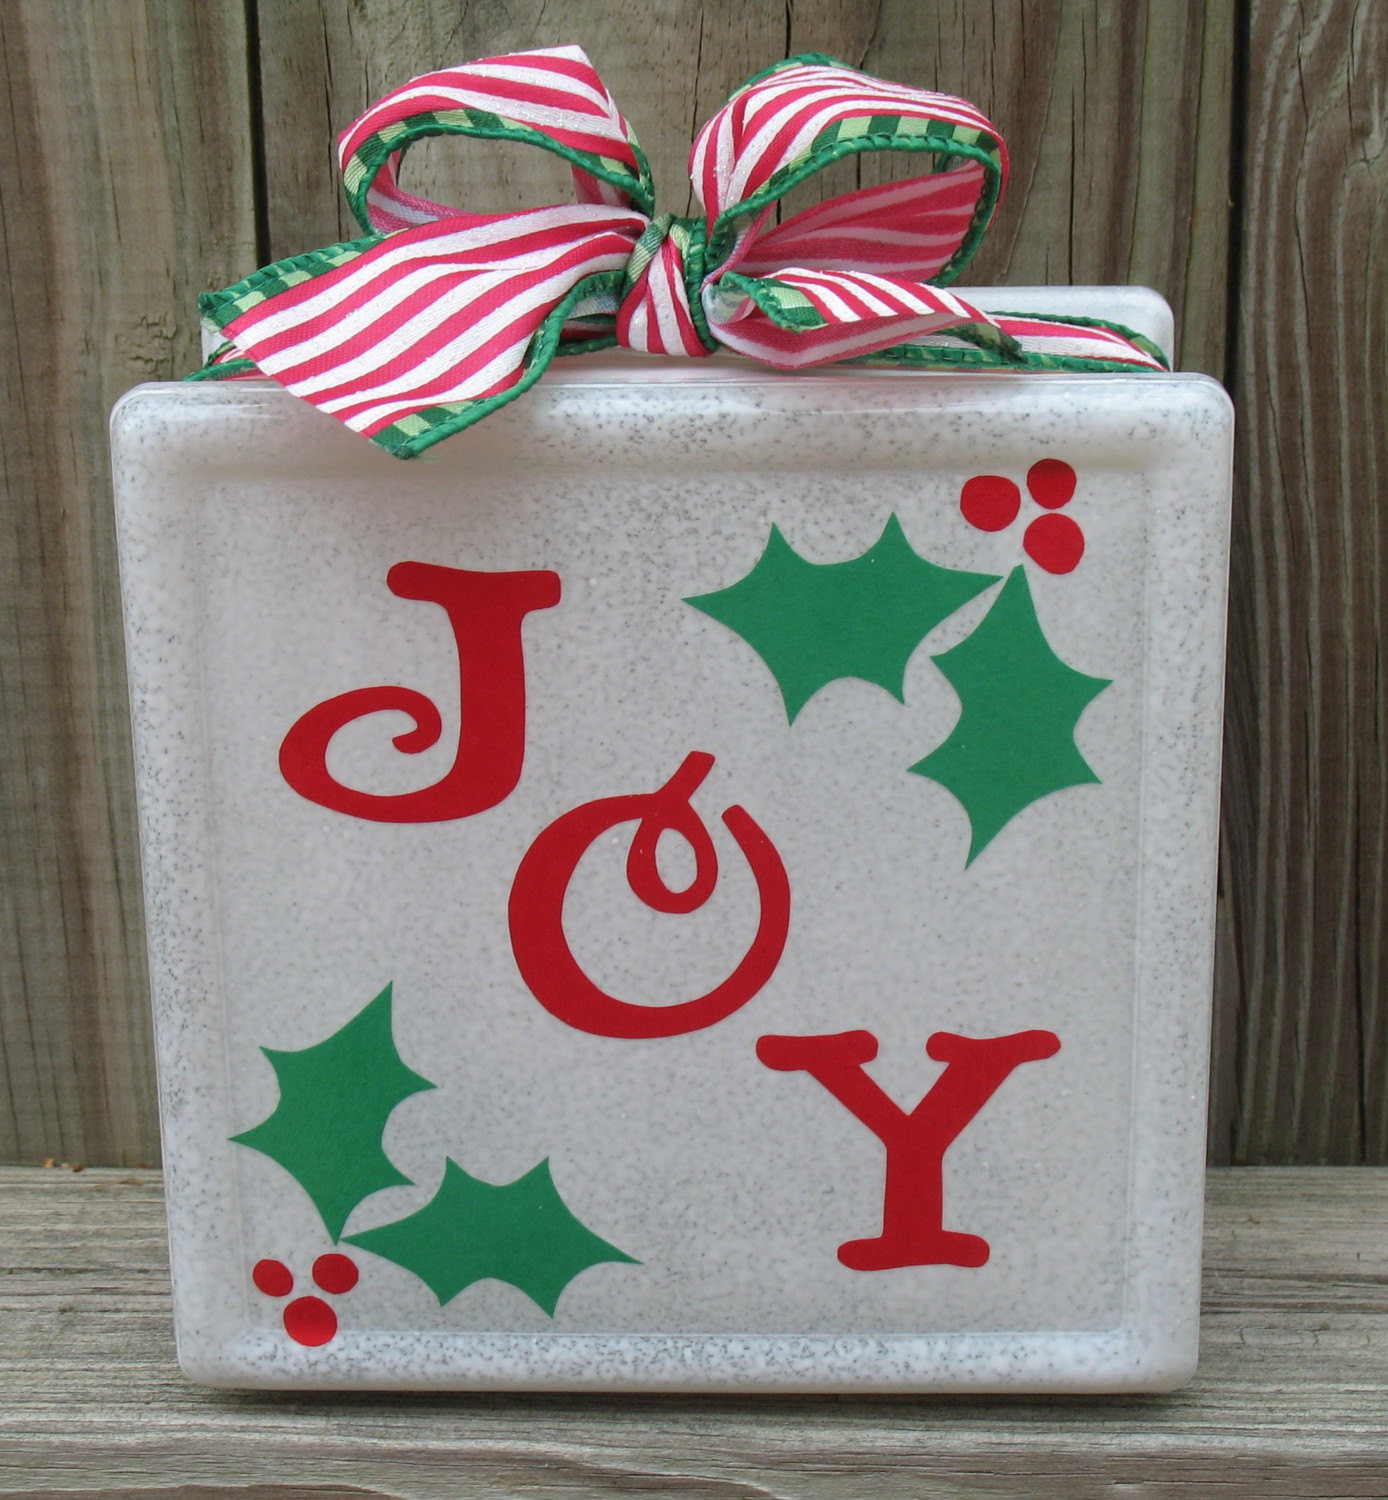 Best ideas about Christmas Craft Ideas Pinterest
. Save or Pin Pinterest Crafts Christmas Now.